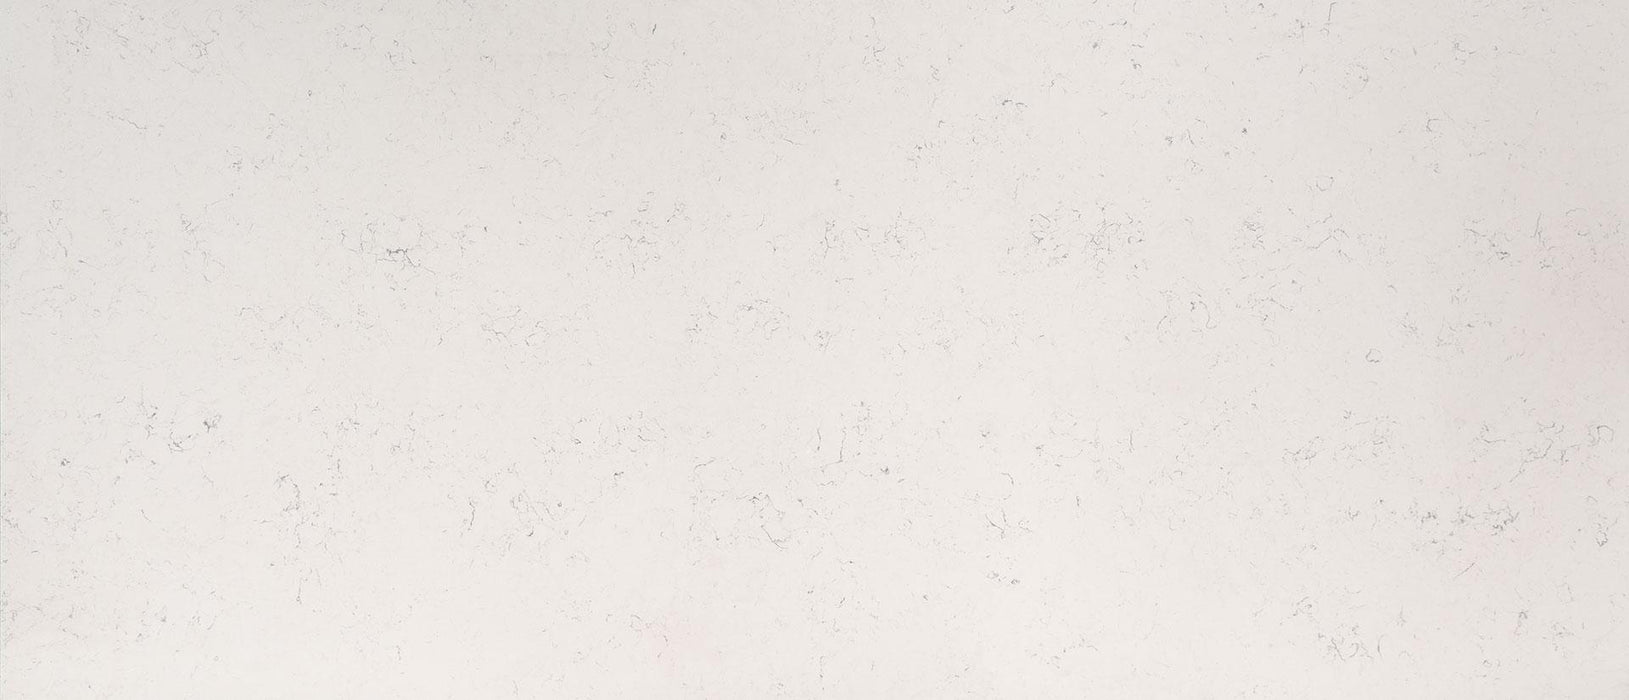 Carrara Marmi 127x75 3 cm Polished Quartz Slab